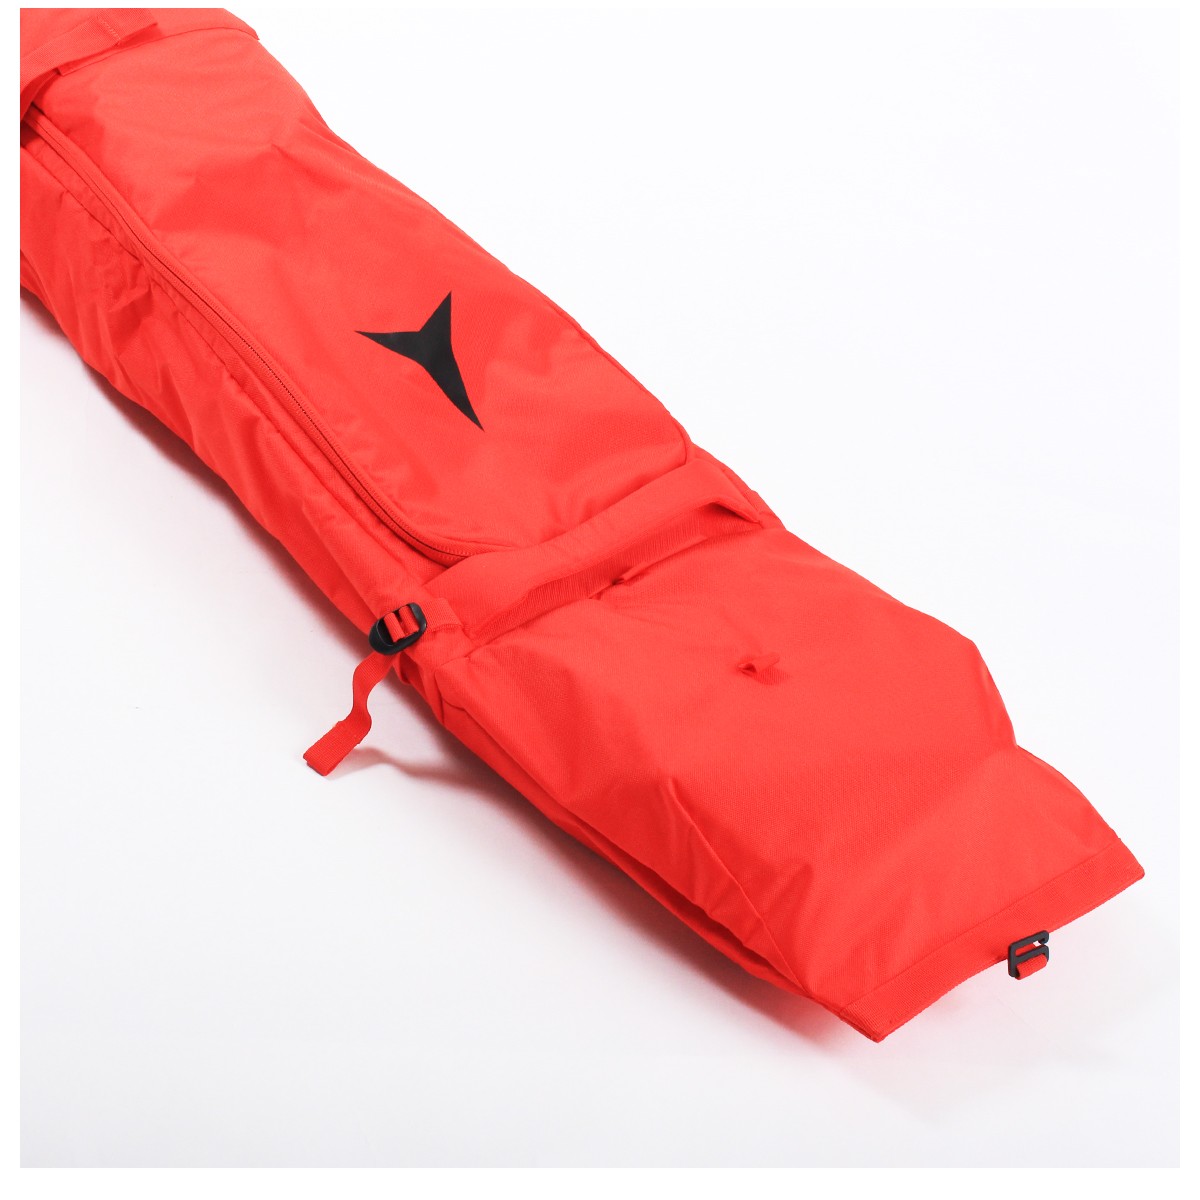 ATOMIC〔Double Ski Case・Ski Bag〕 RS DOUBLE SKI WHE - Ski Gear 